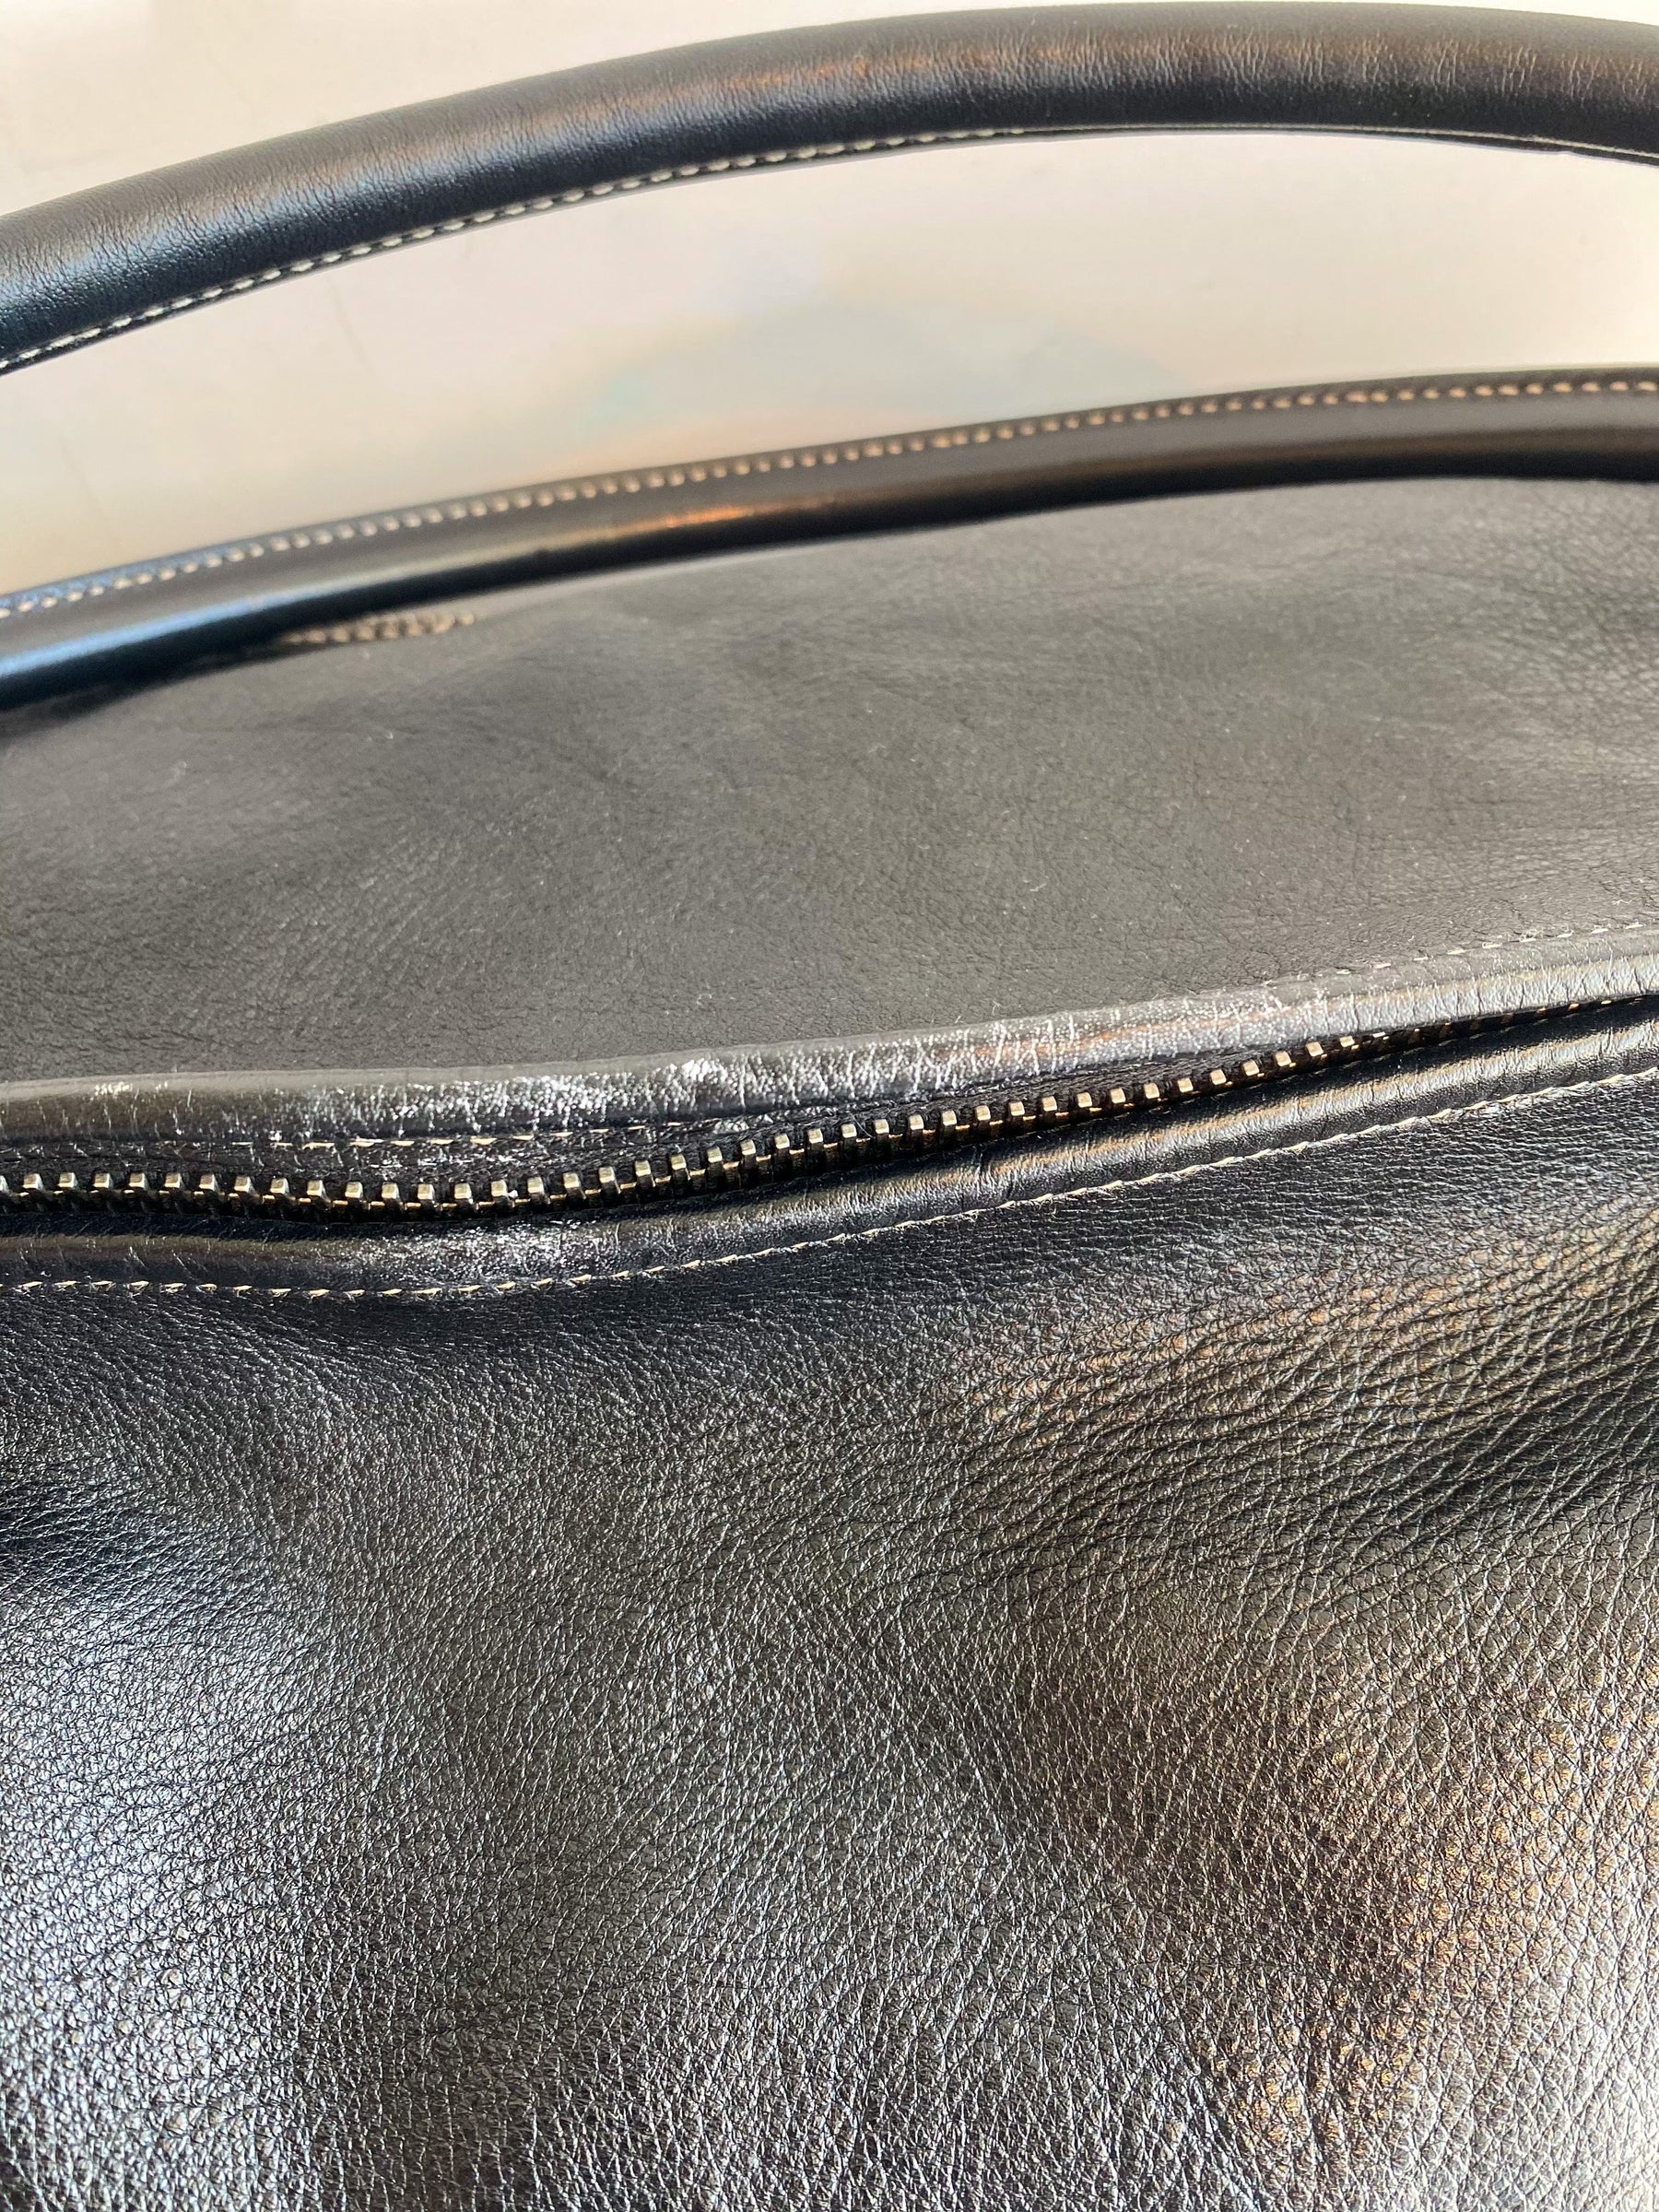 Gucci Black Leather Weekender Bag Top of Bag Zipper Closure